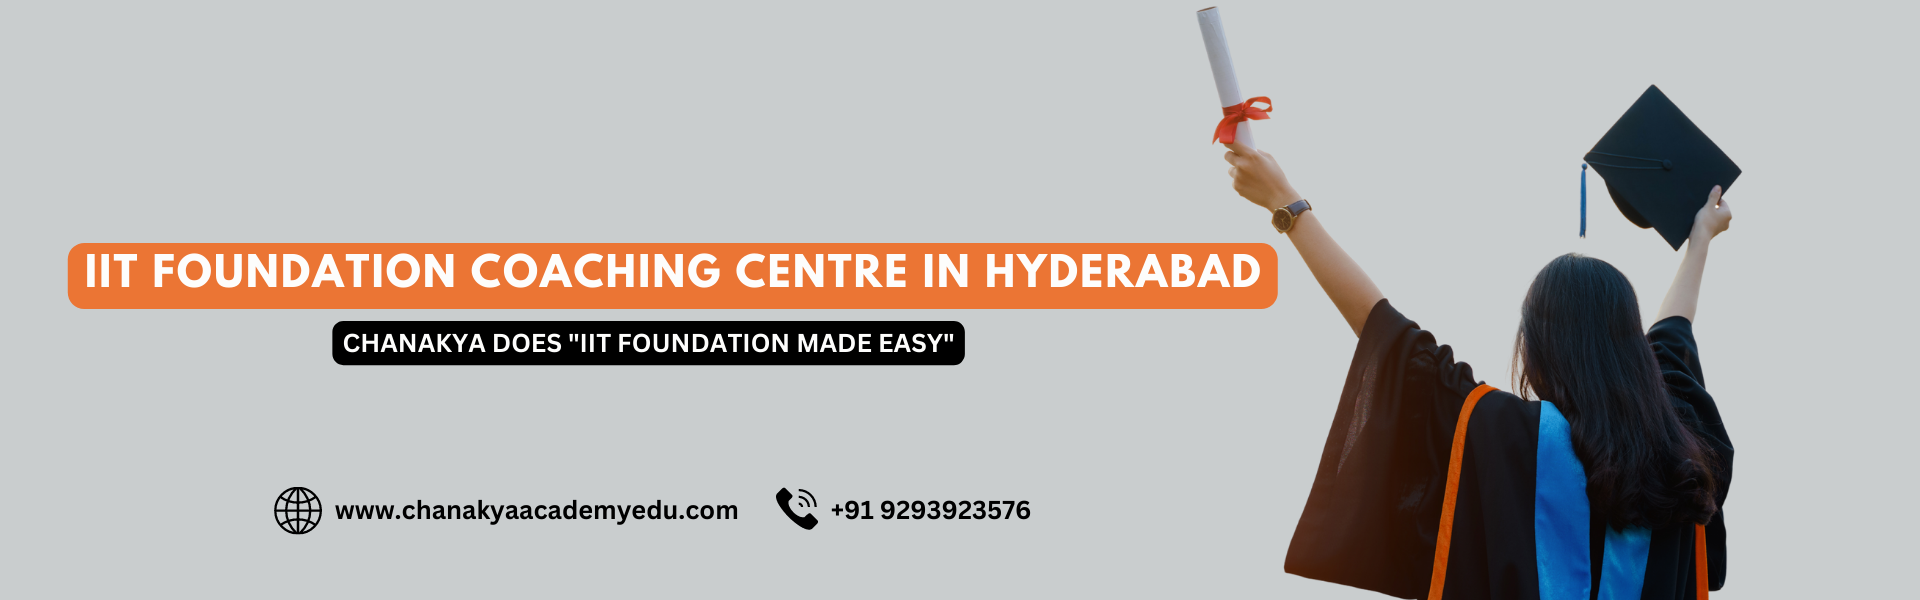 Chanakya IIT Foundation Coaching Centre in Hyderabad